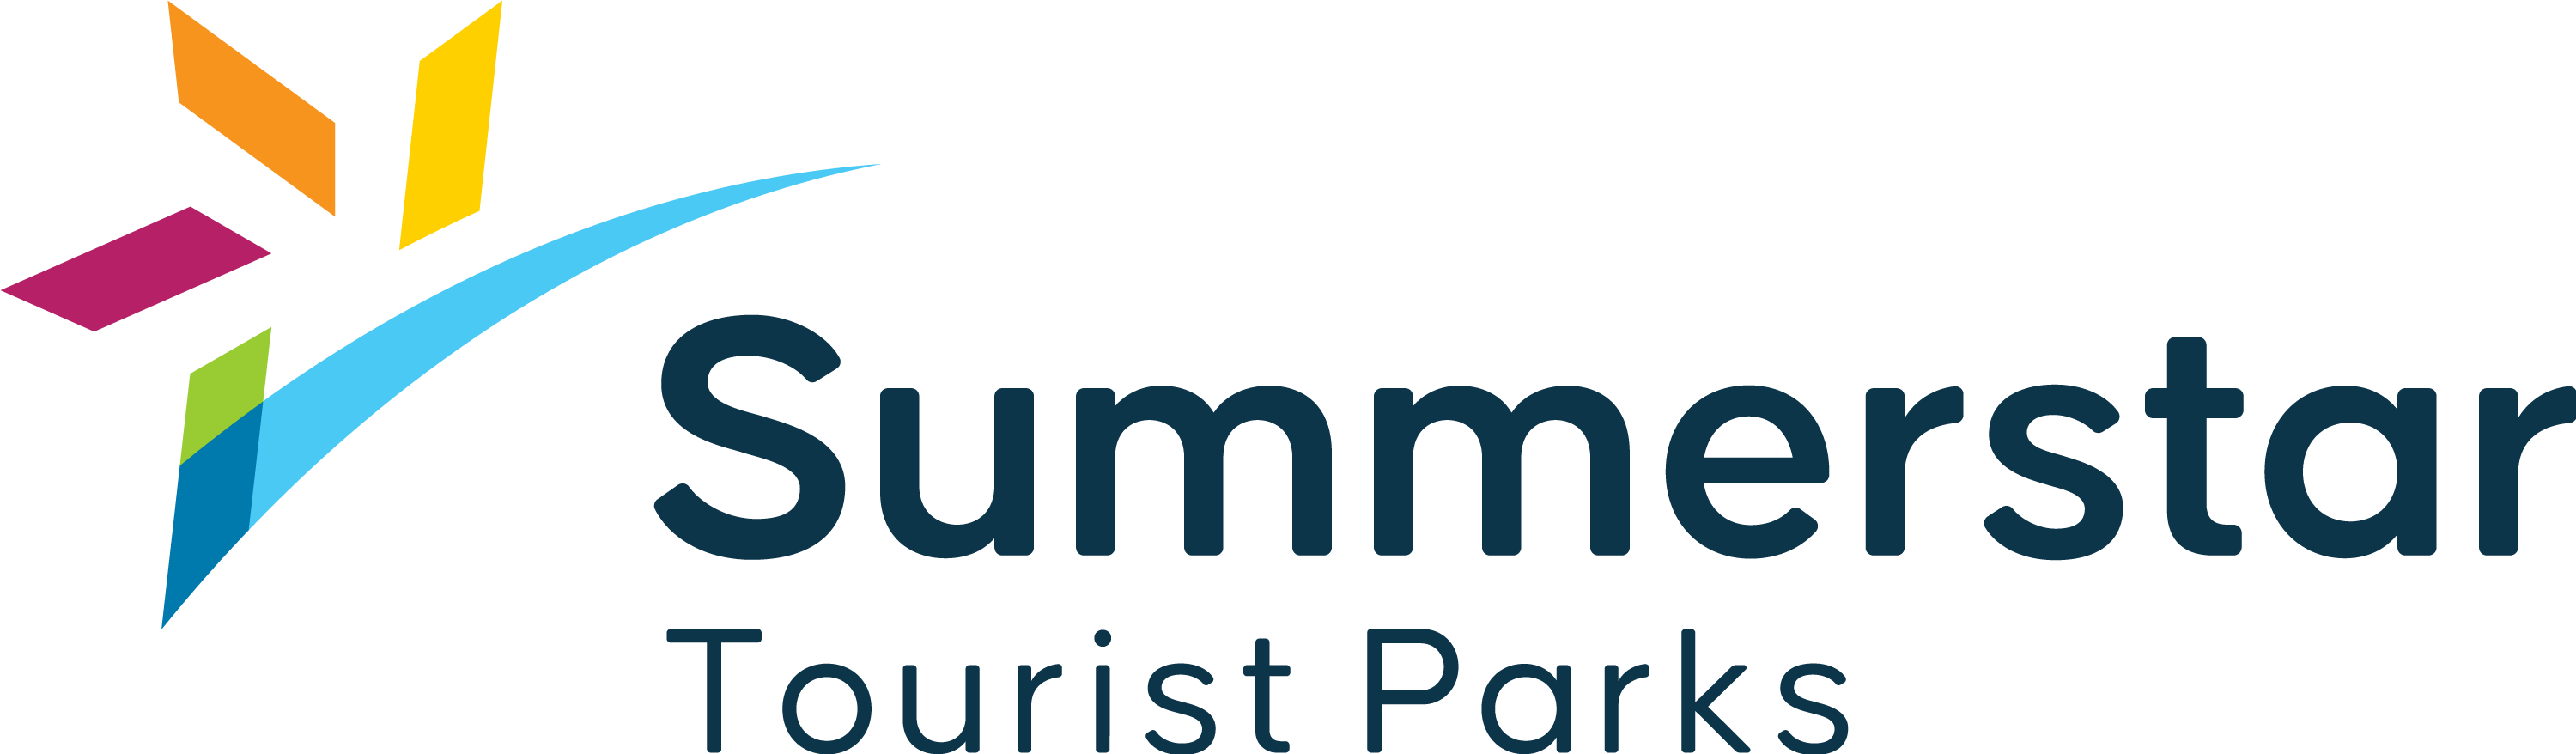 Summerstar Tourist Parks - Aquatic Facility Inspection 